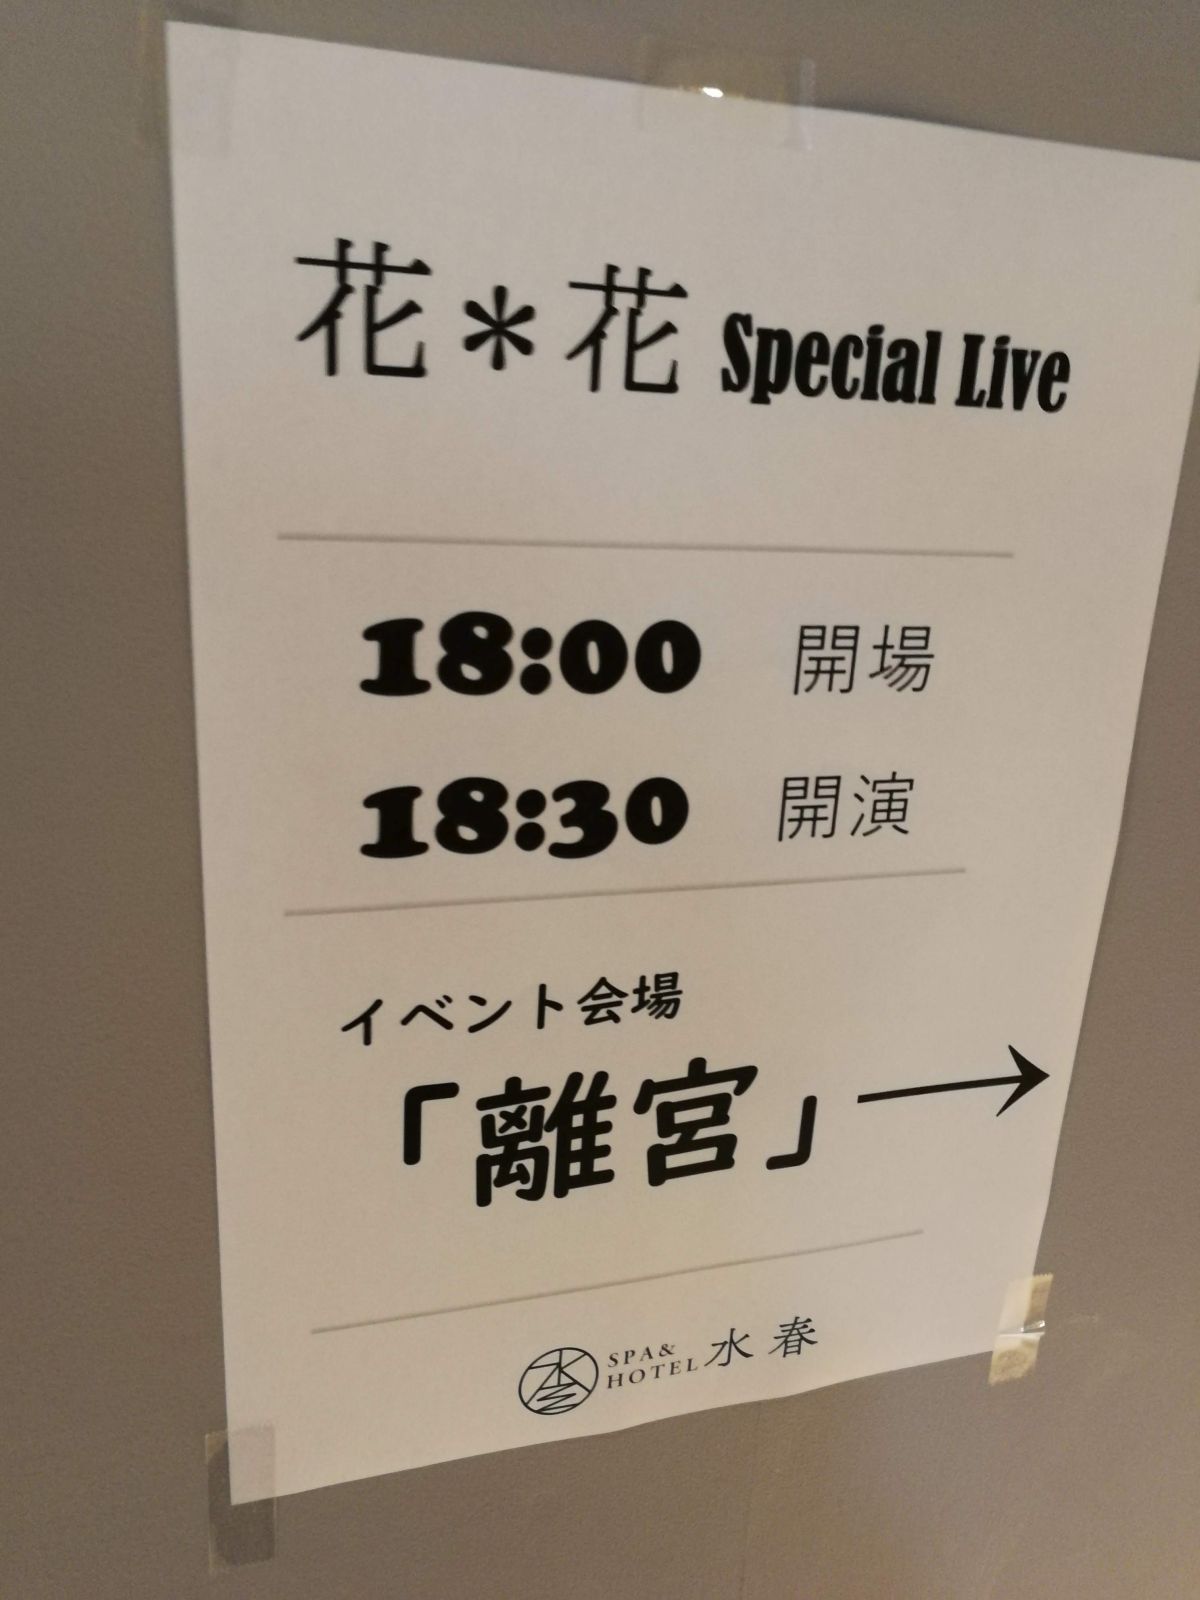 Special Live